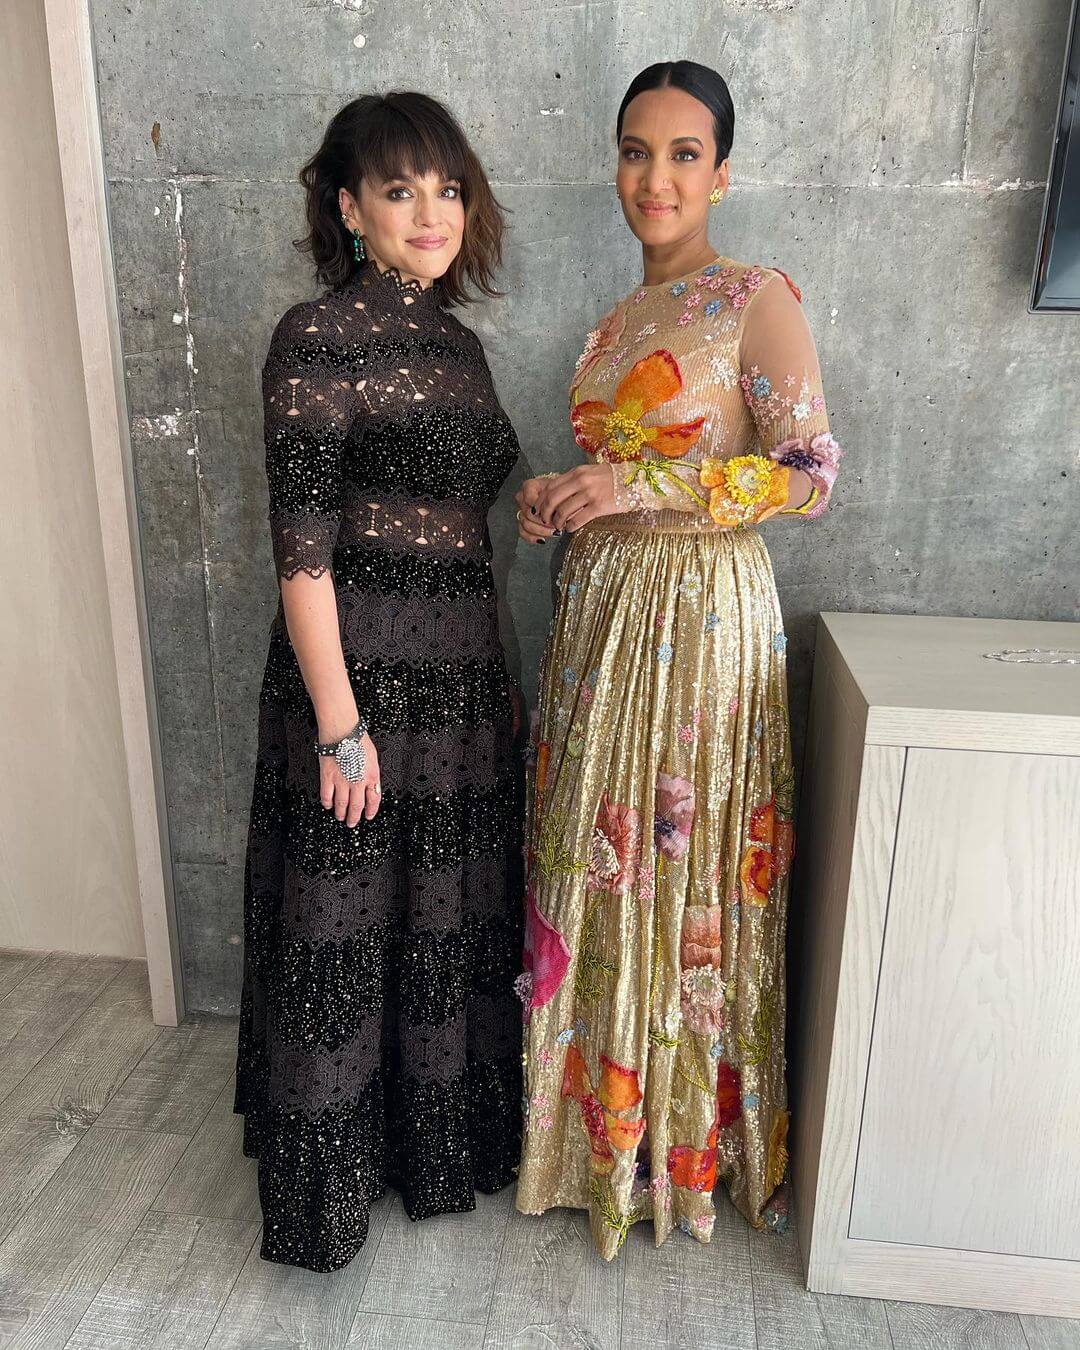 Grammy Awards 2023: (L-R): Nora Jones with her sister and Grammy nominee Anoushka Shankar. Photo Credit: www.instagram.com/anoushkashankarofficial